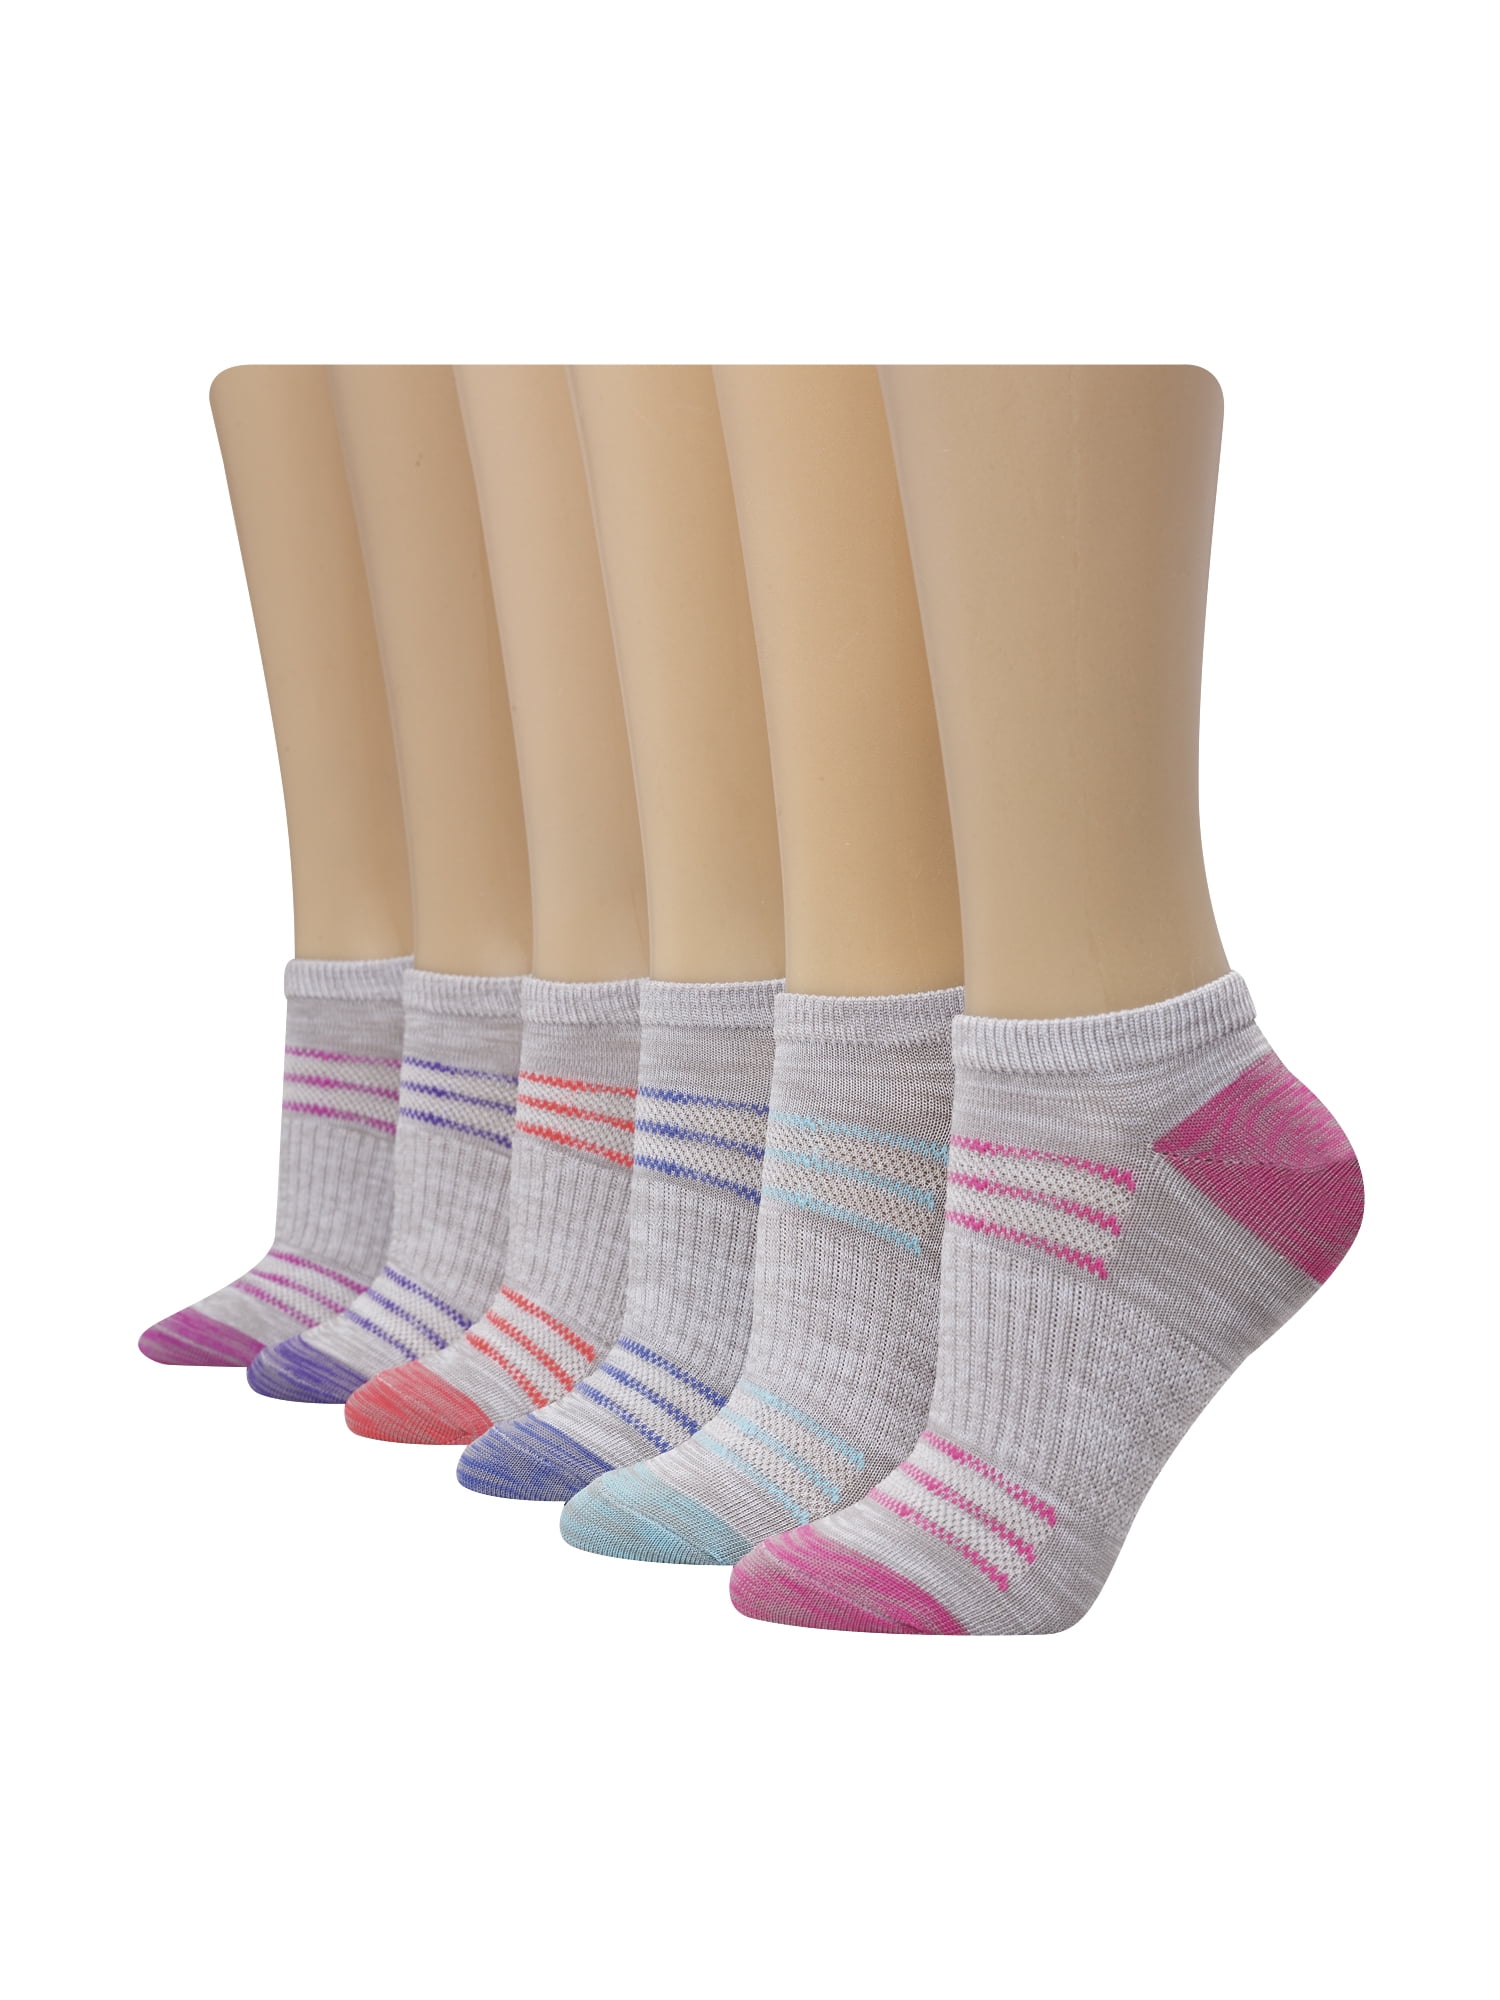 Hanes Women's Performance Cool No-Show Socks 6 pack - Walmart.com